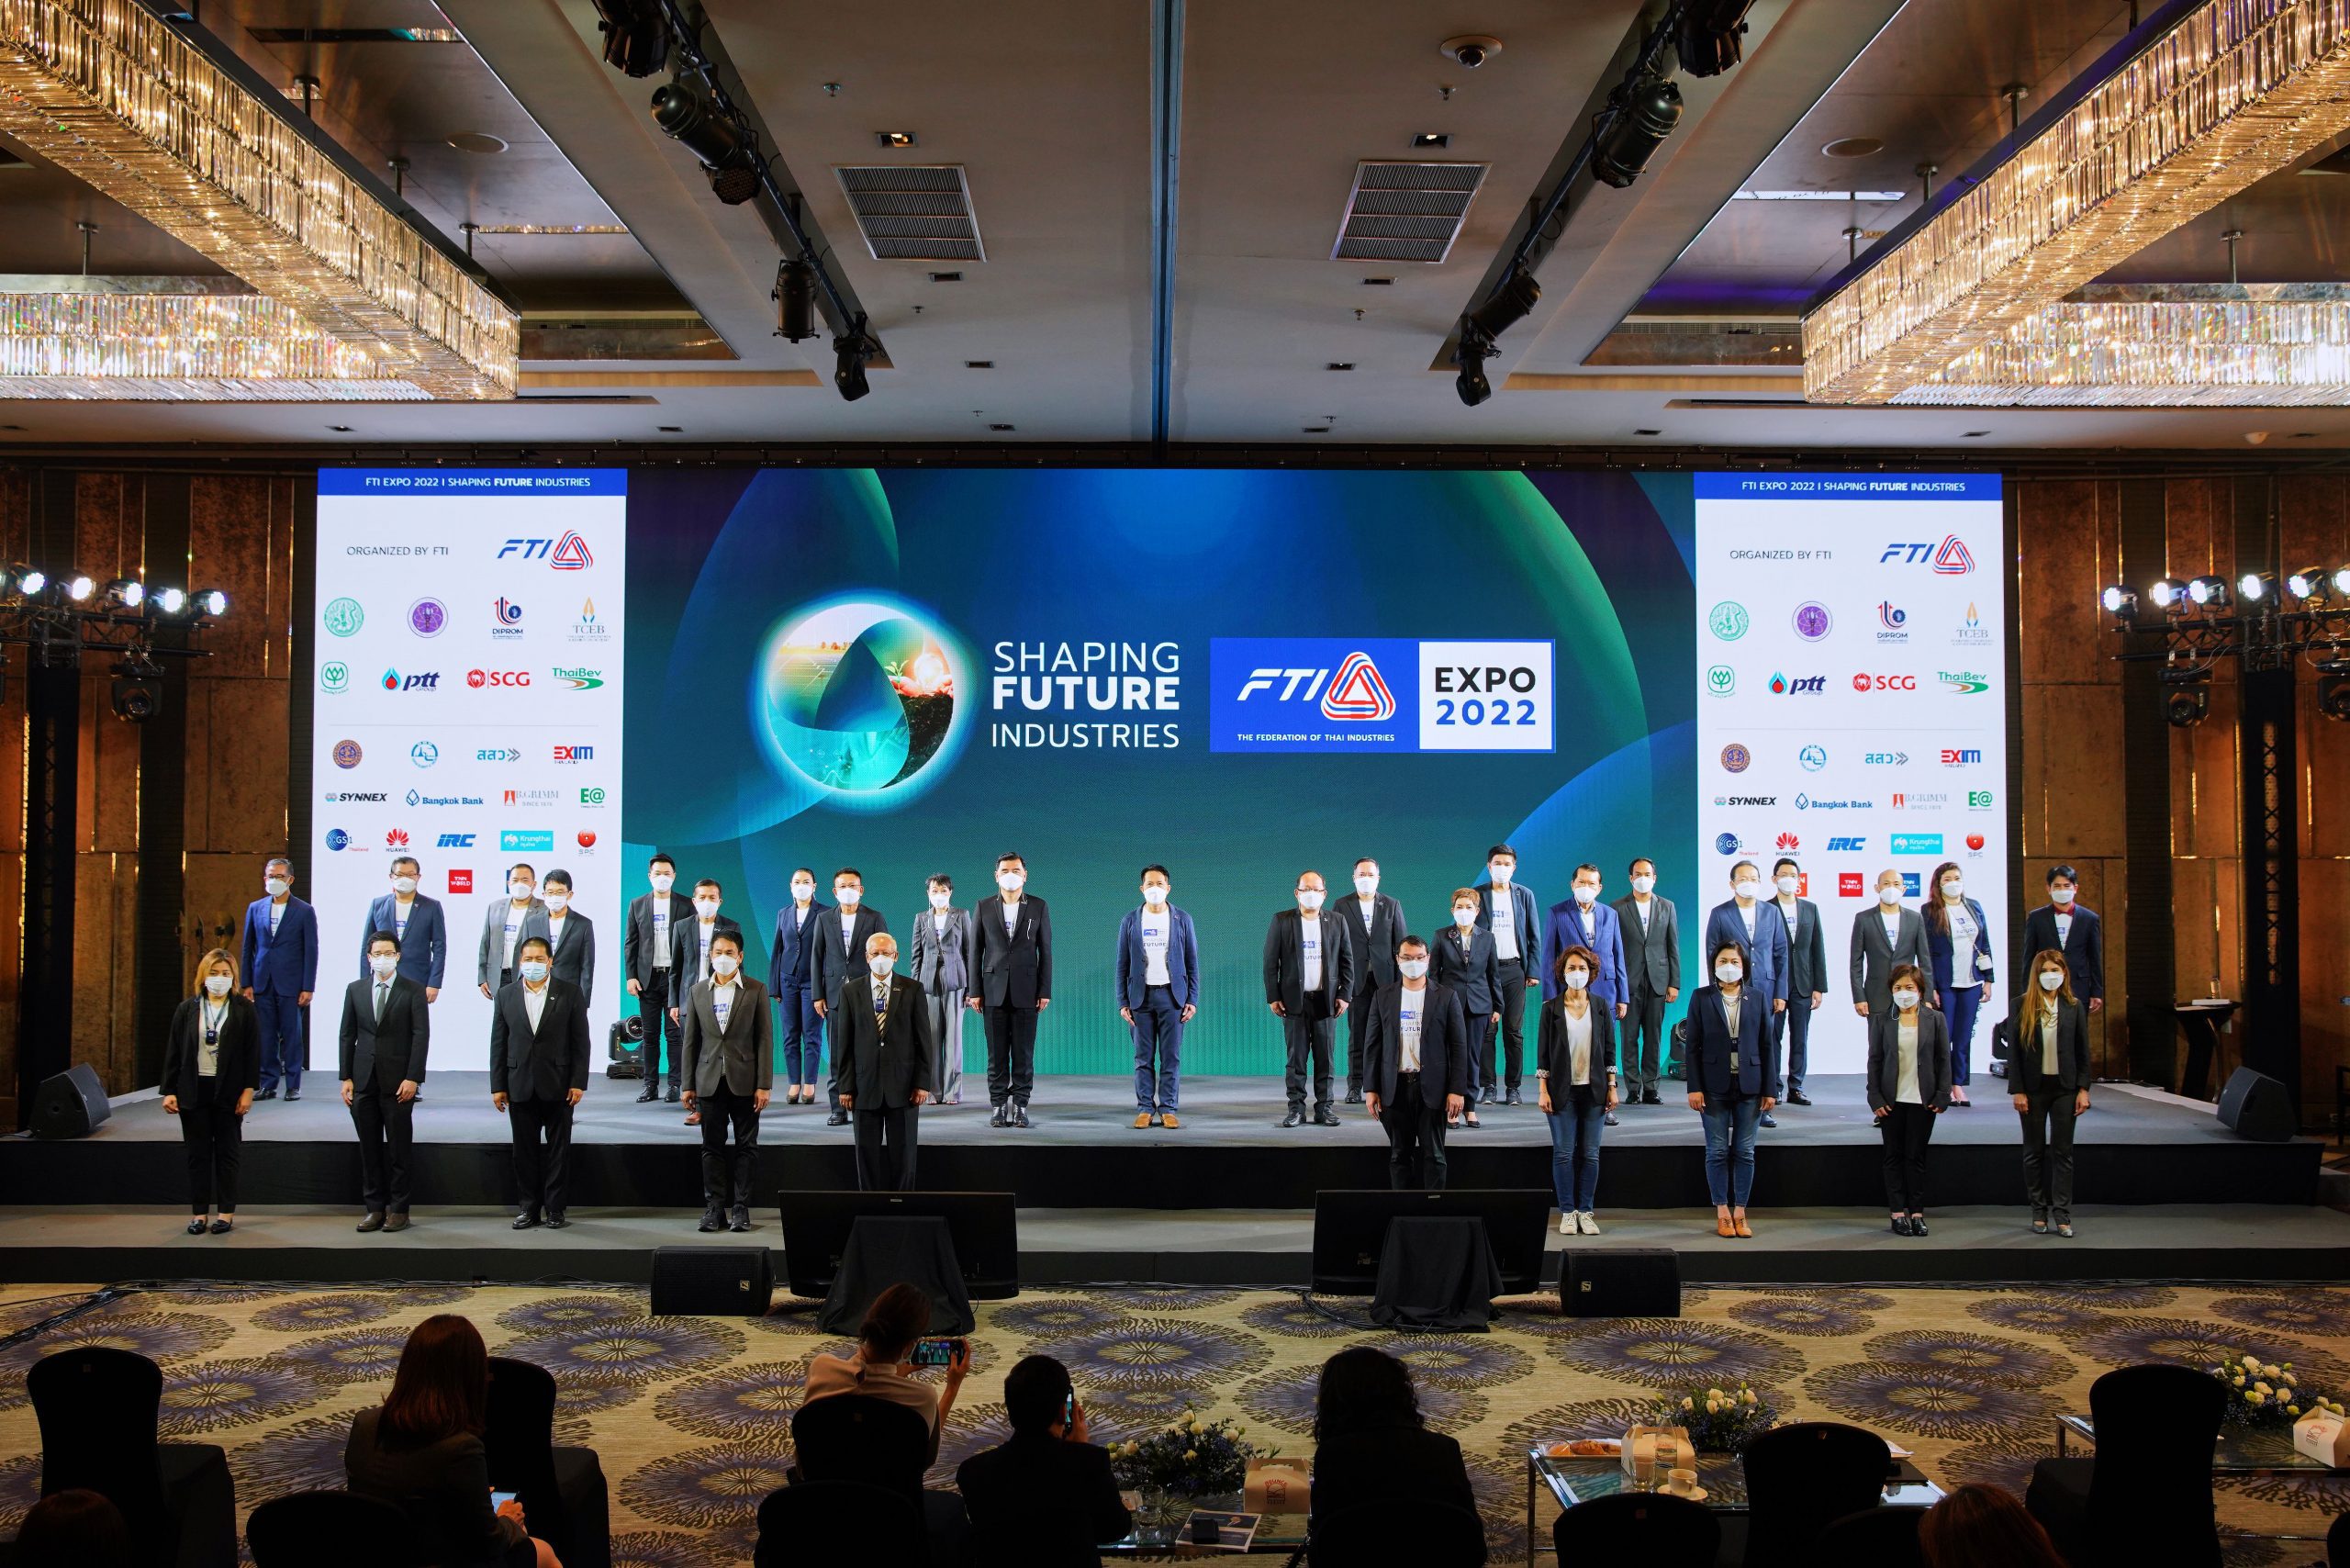 FTI EXPO 2022 รวมพลังทุกภาคส่วน ชูแนวคิด SHAPING FUTURE INDUSTRIES ฉากทัศน์ใหม่อุตสาหกรรมไทยสู่อนาคต